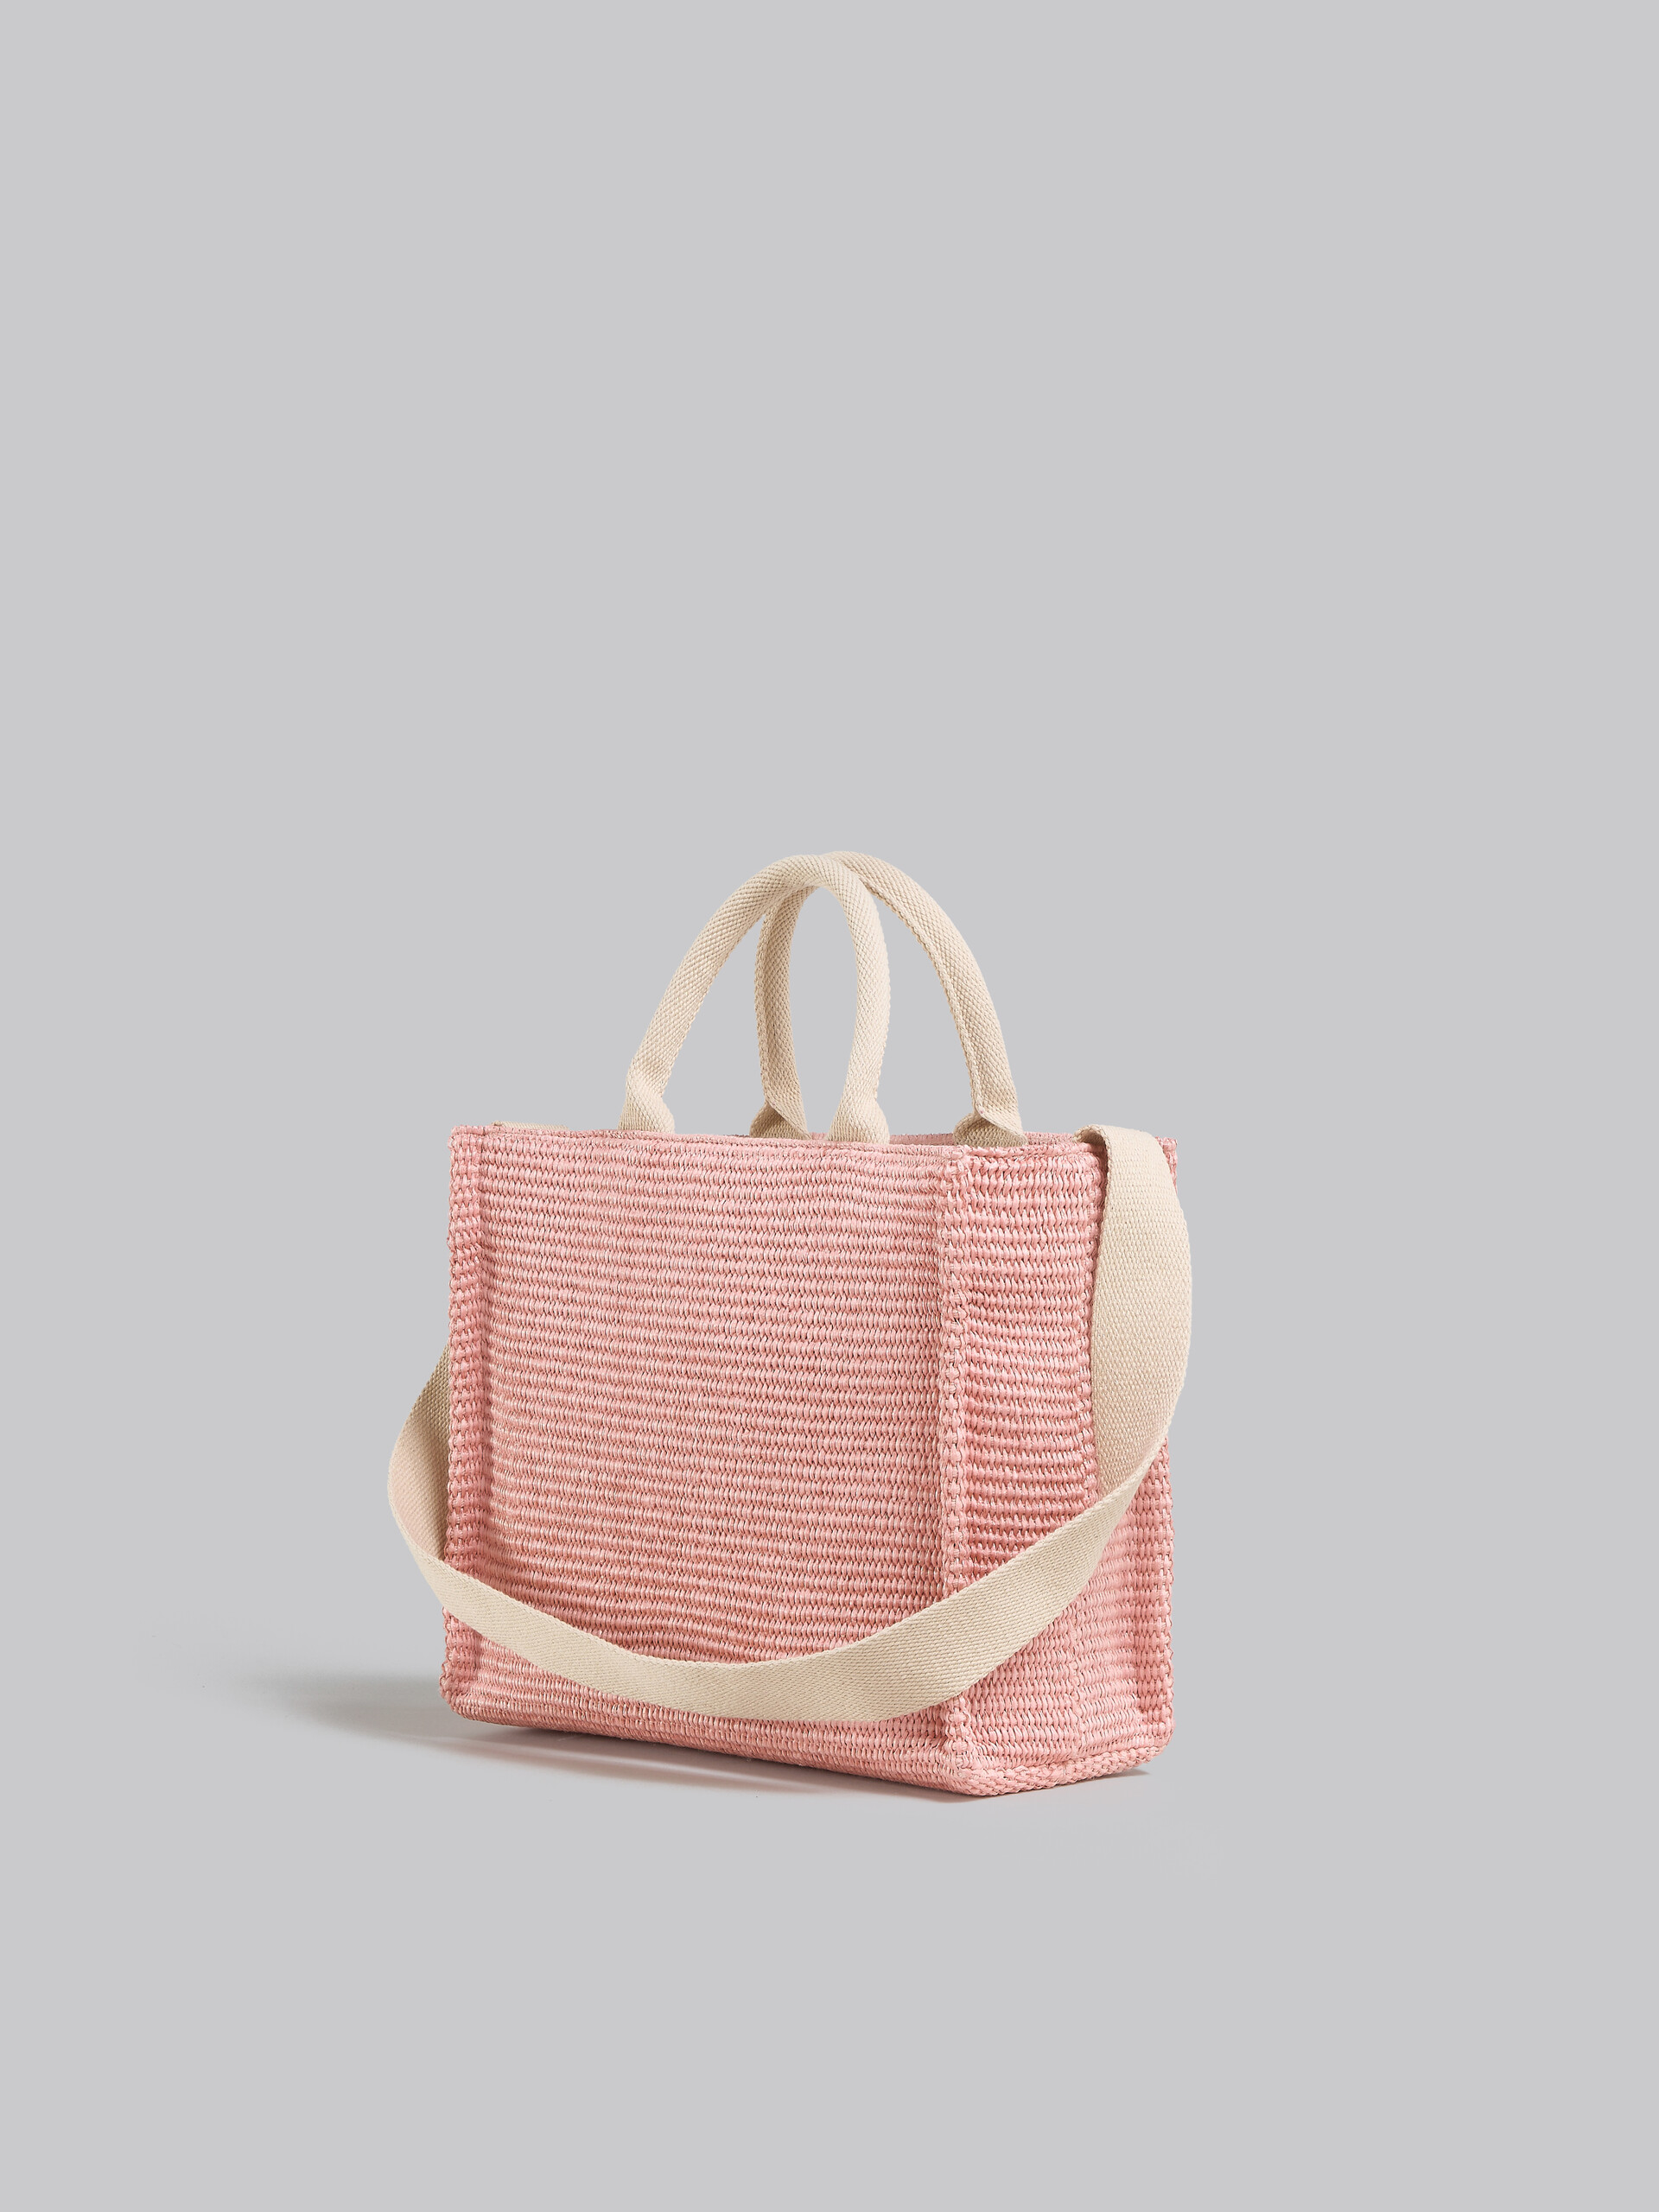 Petit sac cabas en tissu effet raphia lilas - Sacs cabas - Image 3